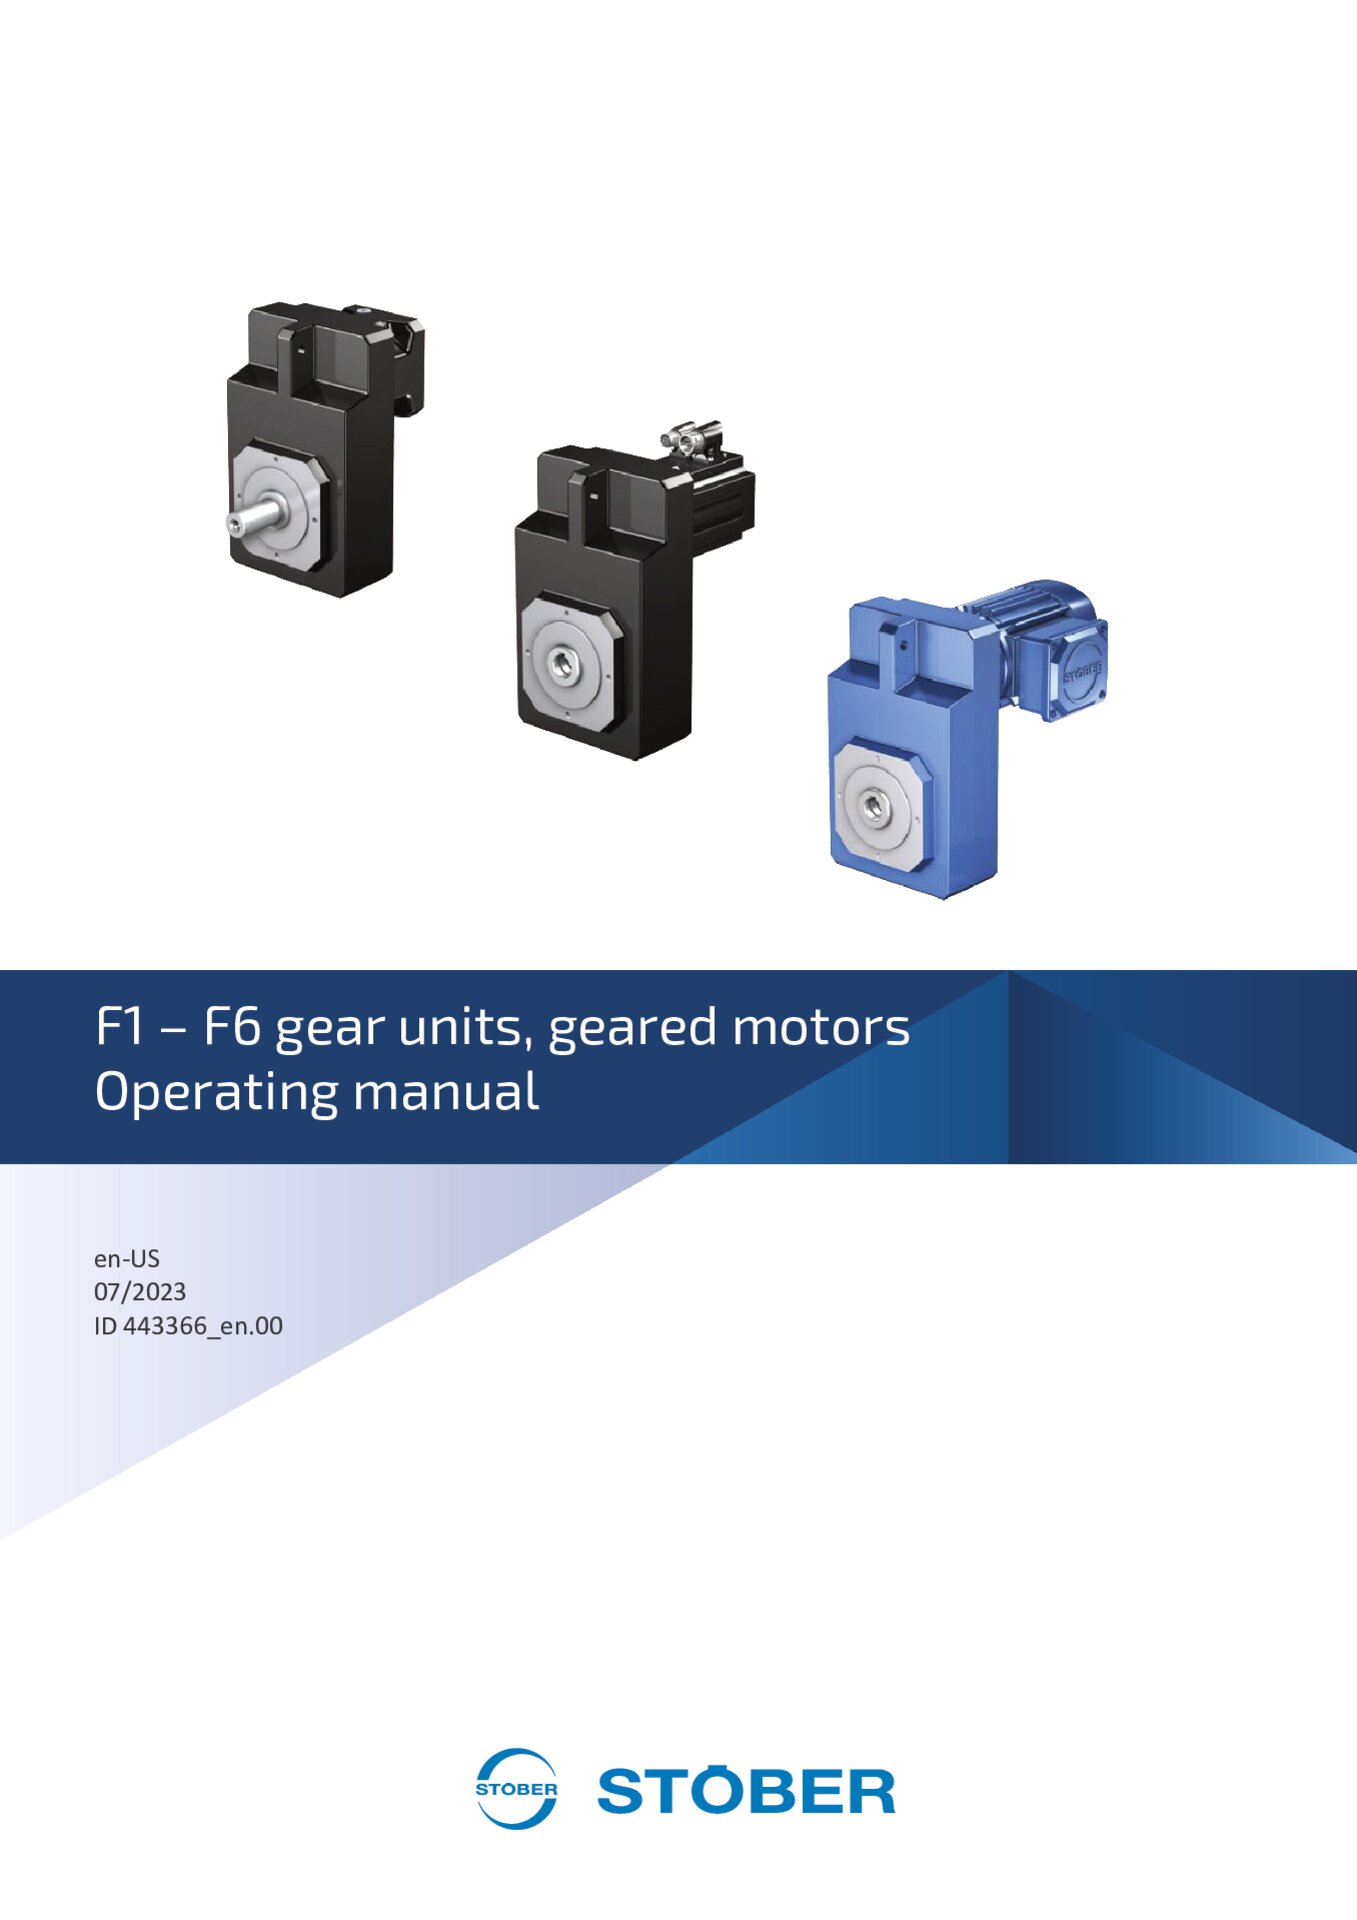 Operating manual F1 - F6 gear units and geared motors